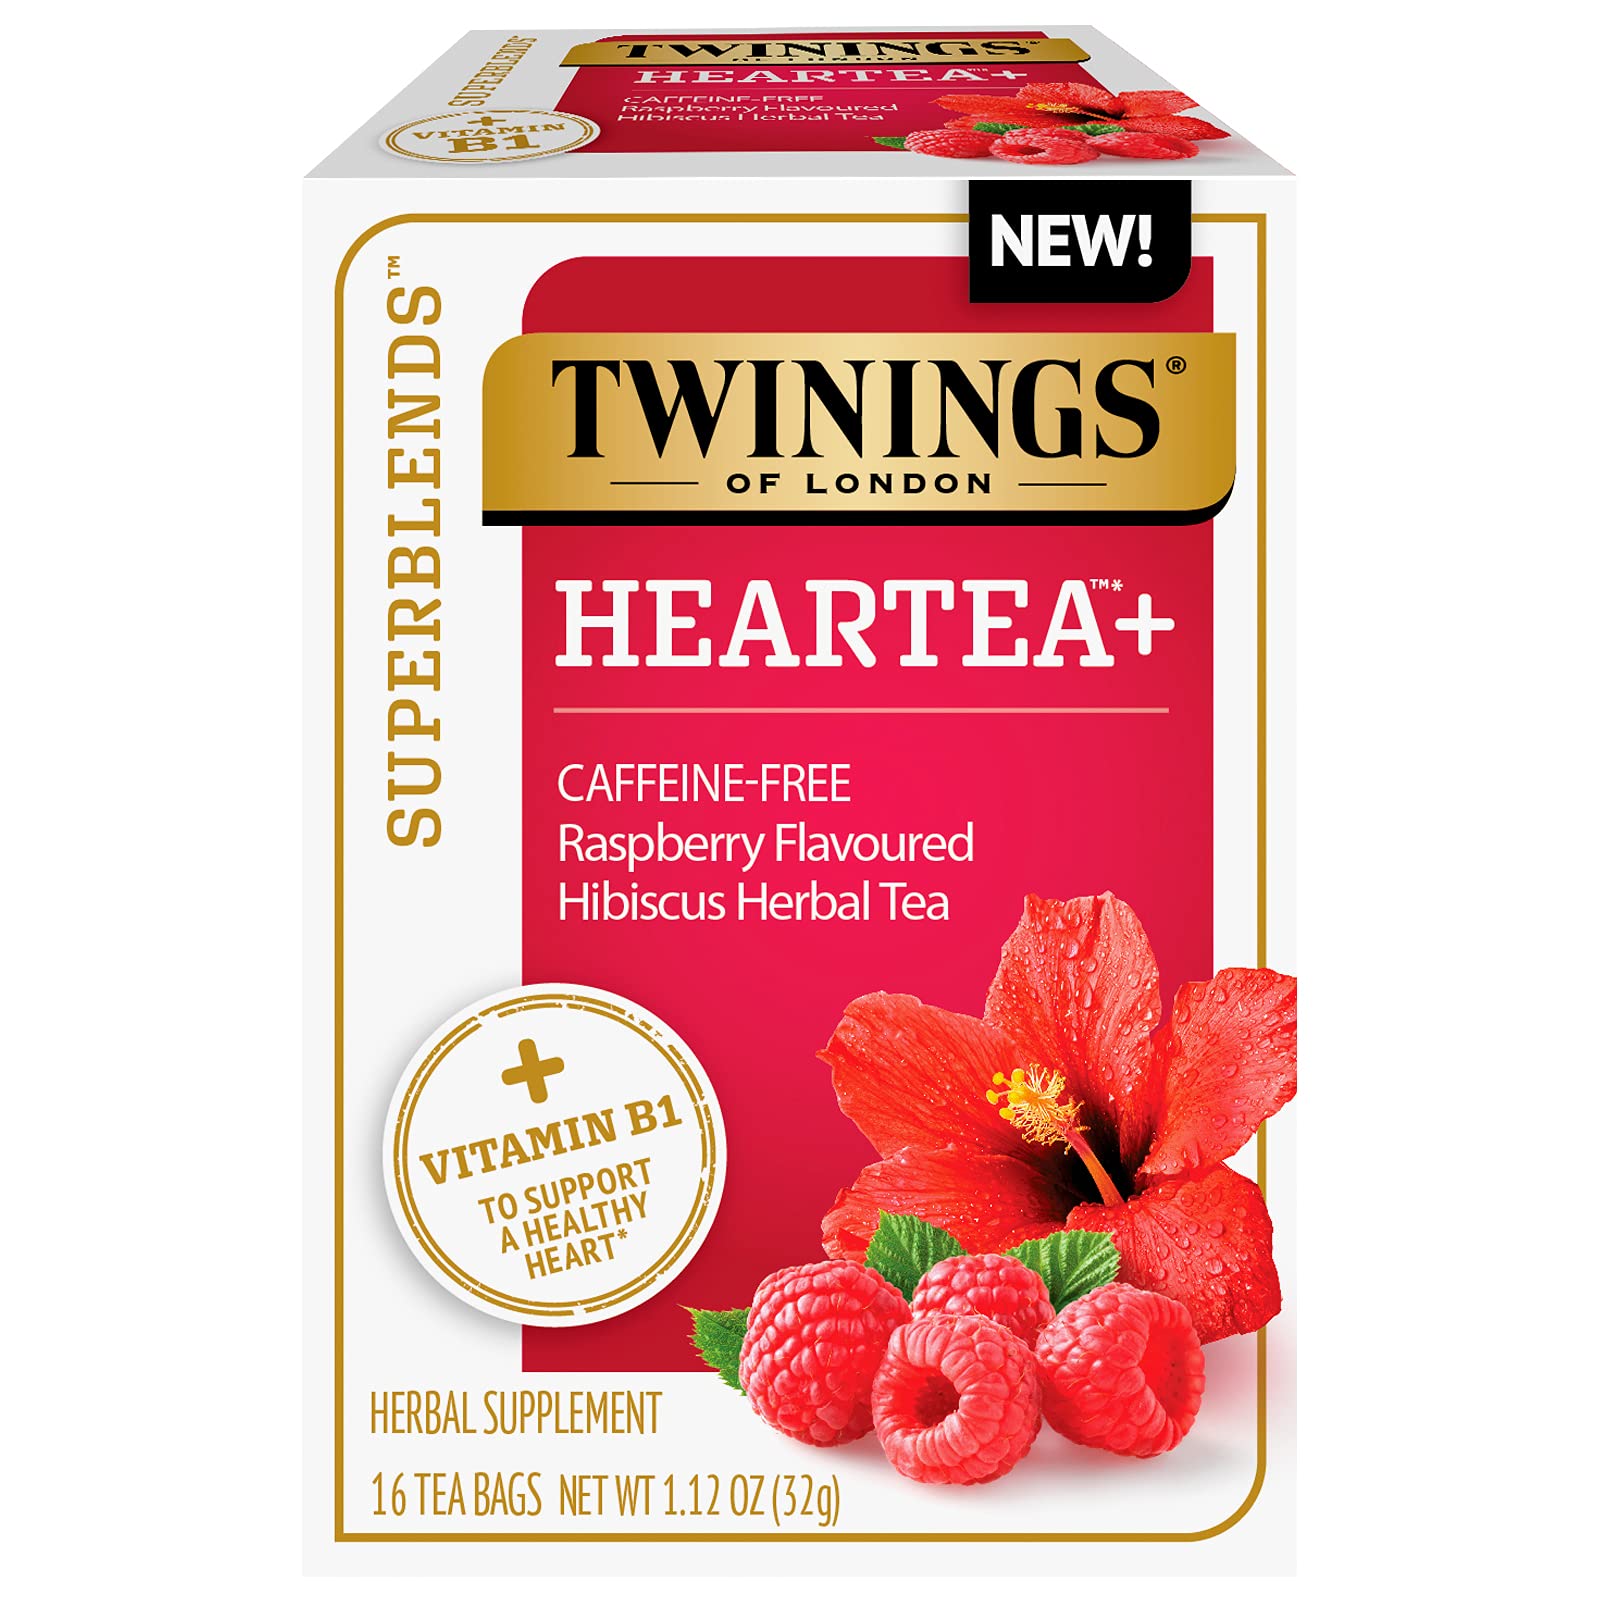 Twinings of London Superblends Heartea + Vitamin B1, Raspberry Flavoured Hibiscus Herbal Tea, Caffeine-Free, 16 Count (Pack of 6)